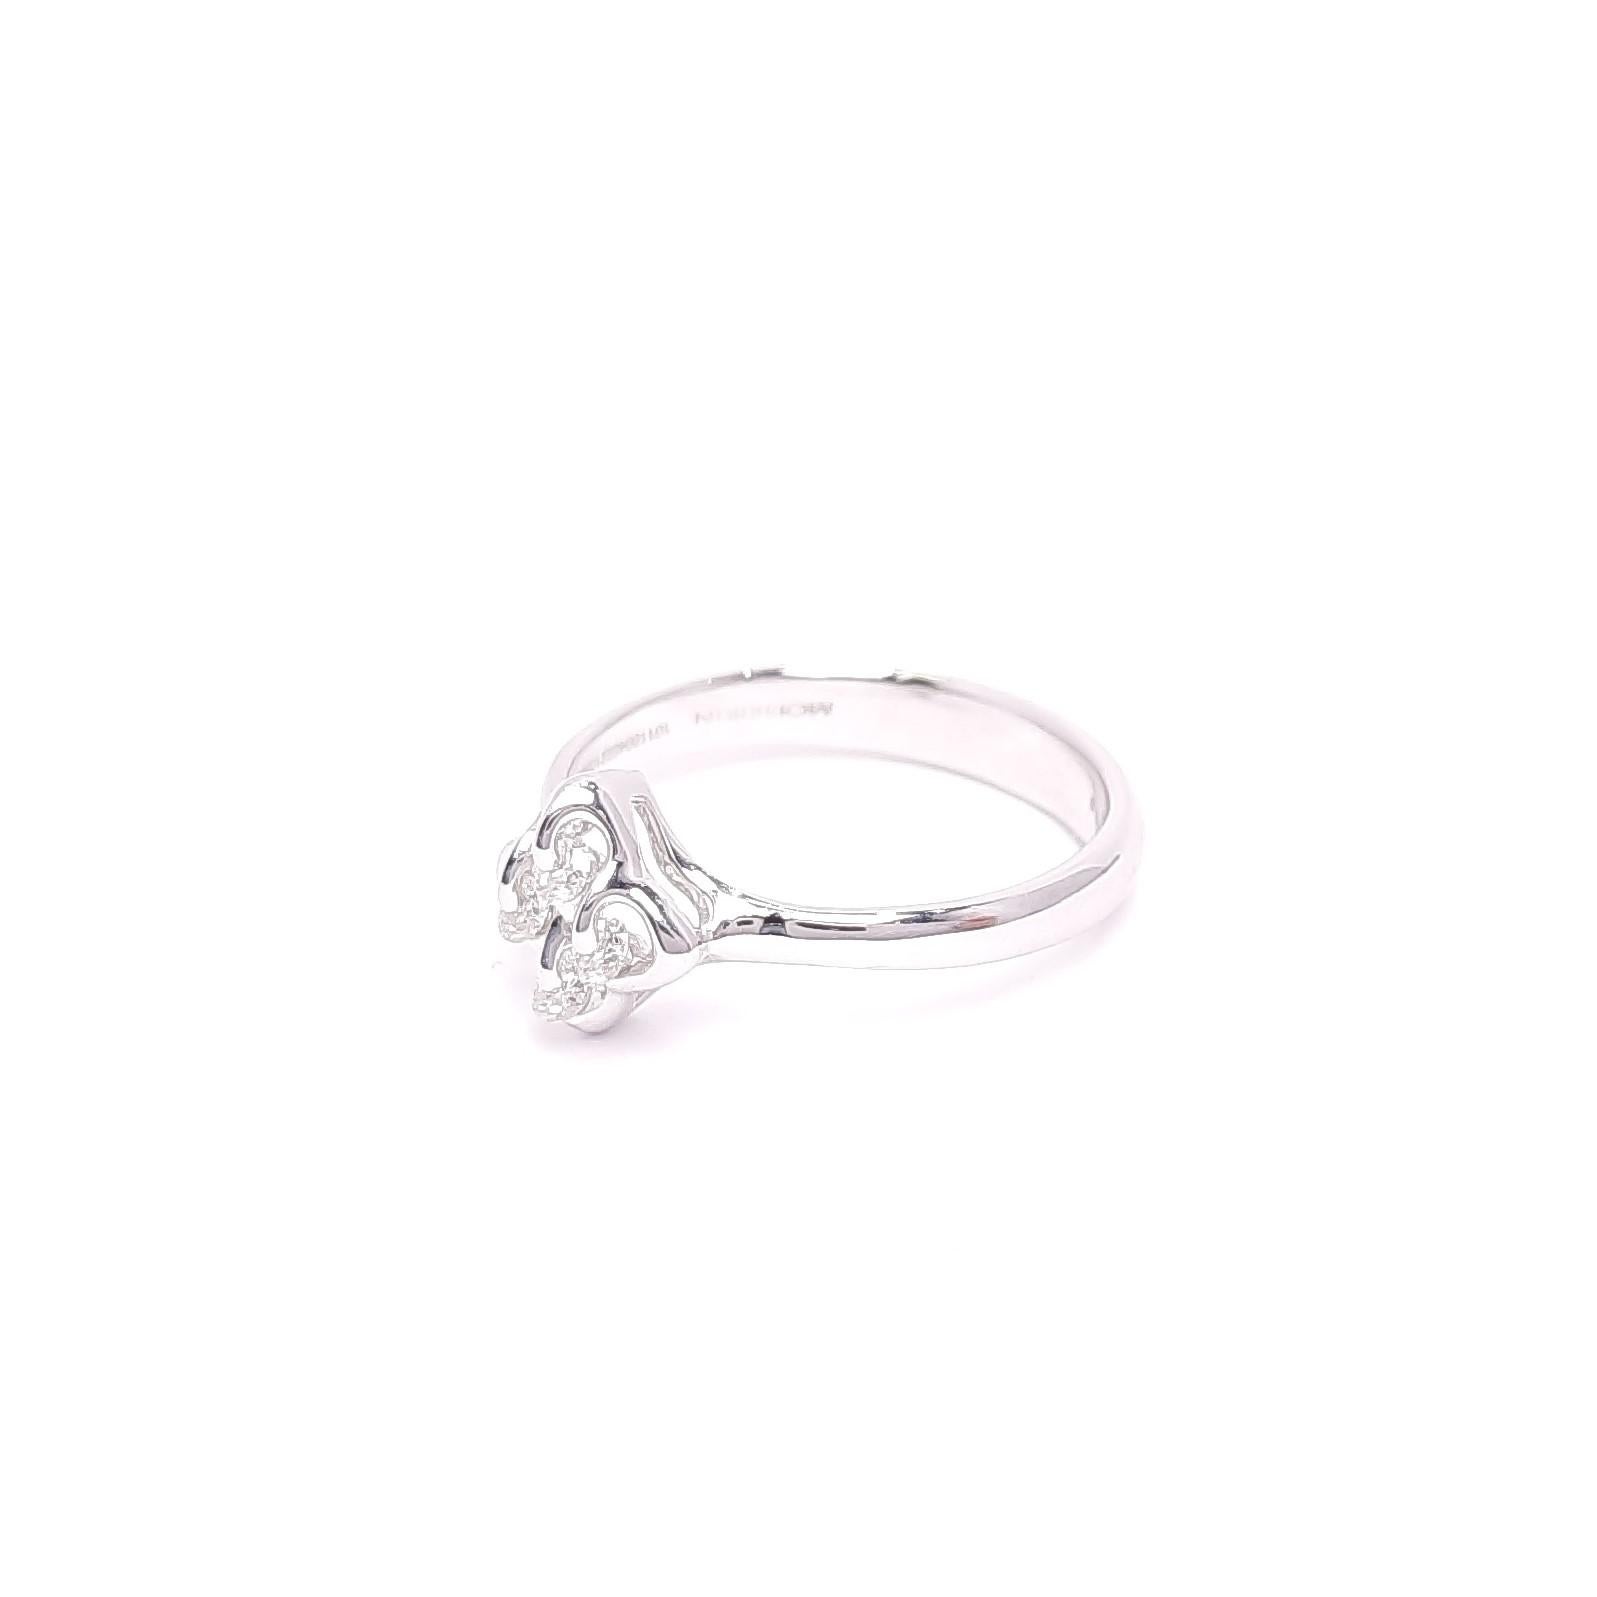 Contemporary MOISEIKIN 18K White Gold Diamond Ring Gift Promotion